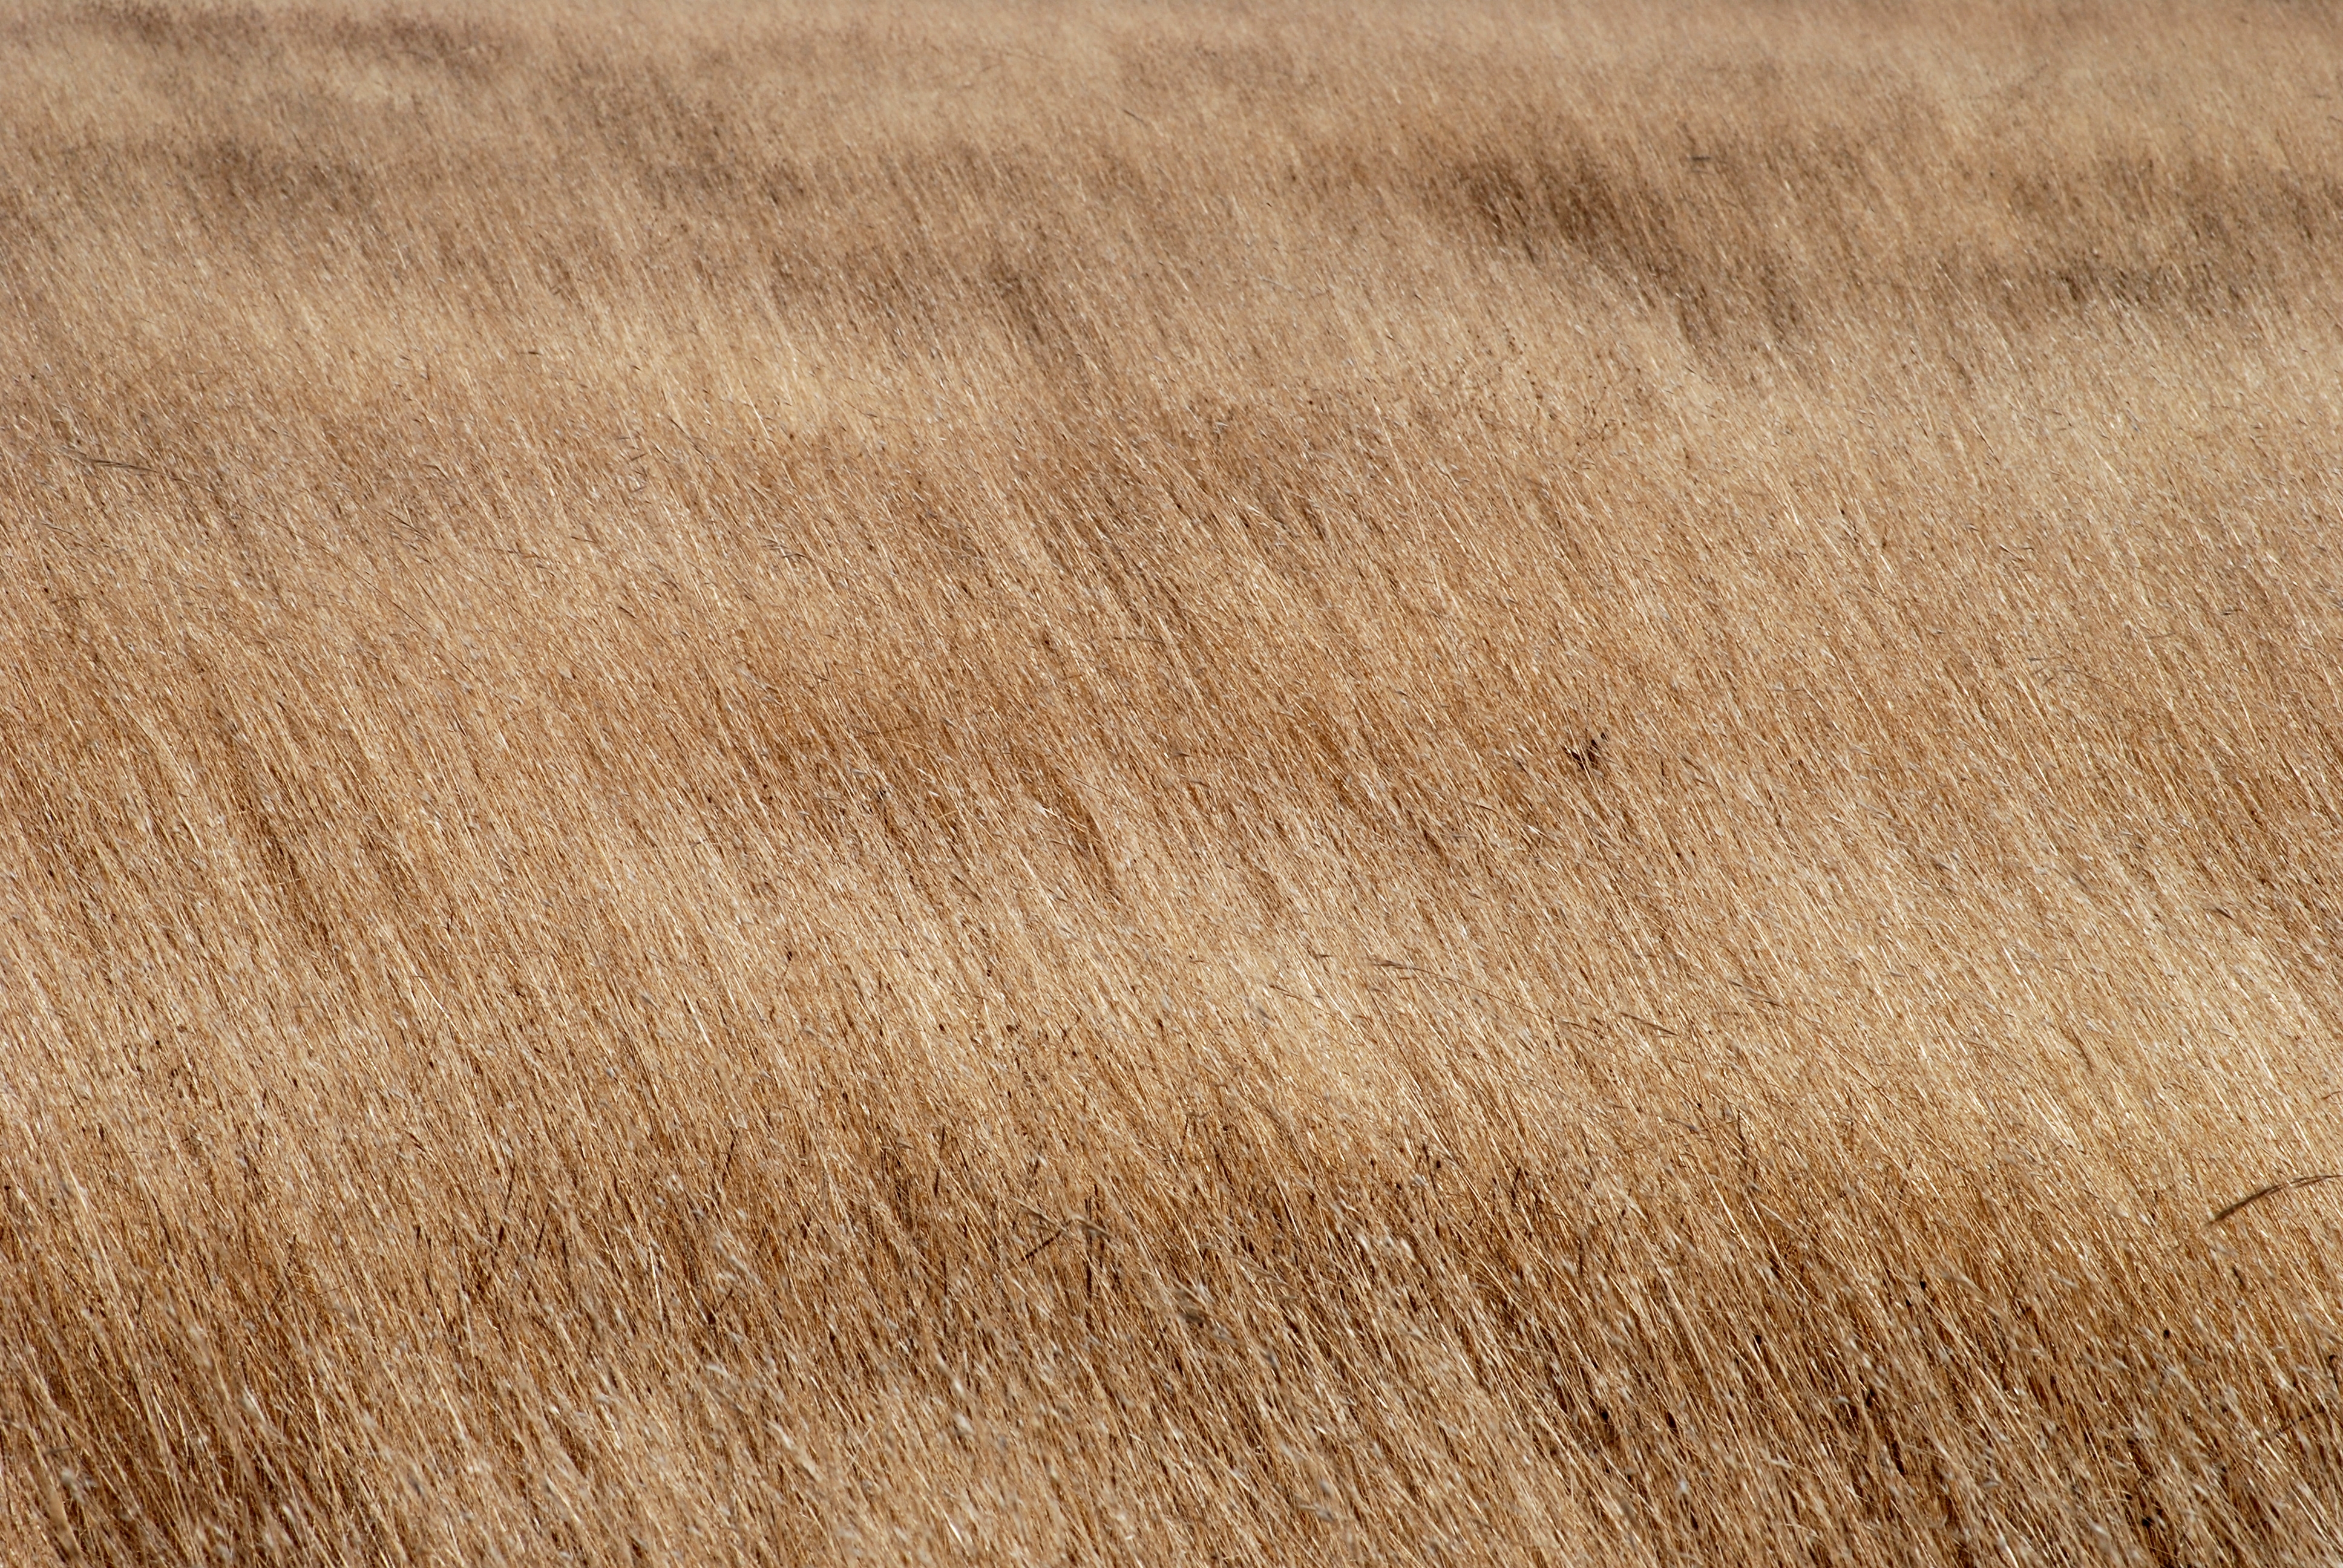 Harvest-field August 2010-1